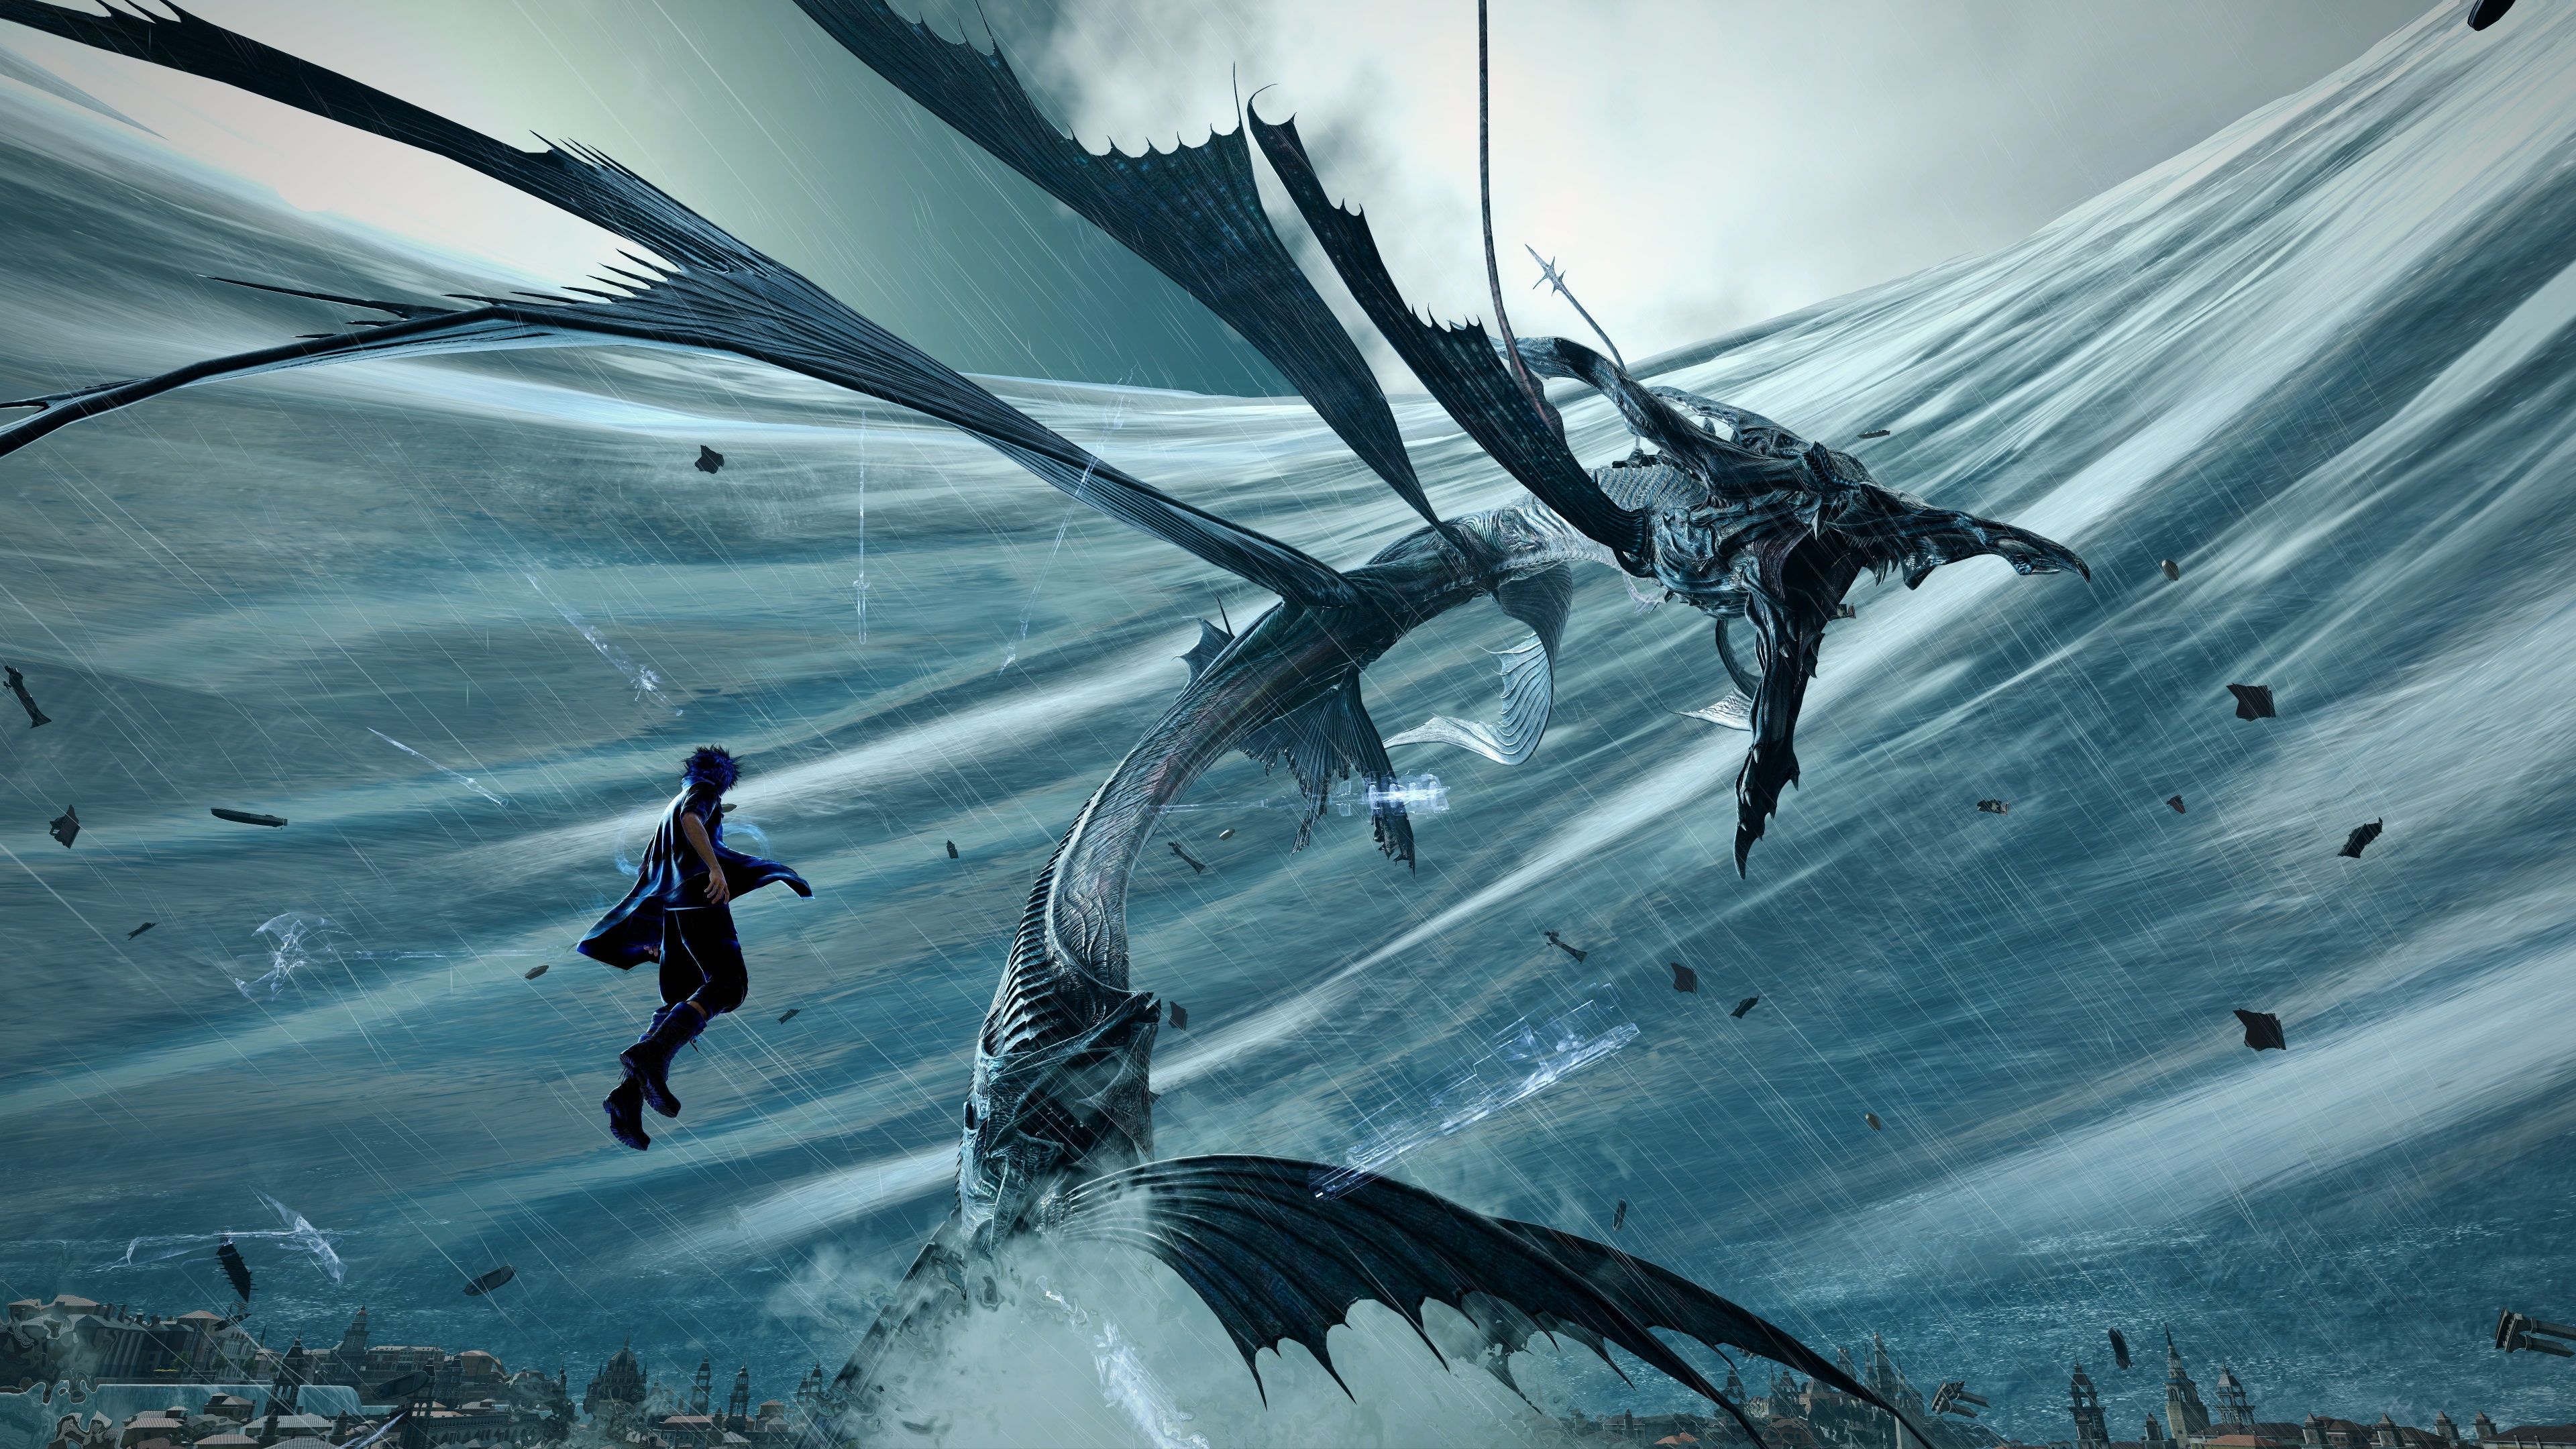 4k Final Fantasy Xv, HD Games, 4k Wallpapers, Images, Backgrounds